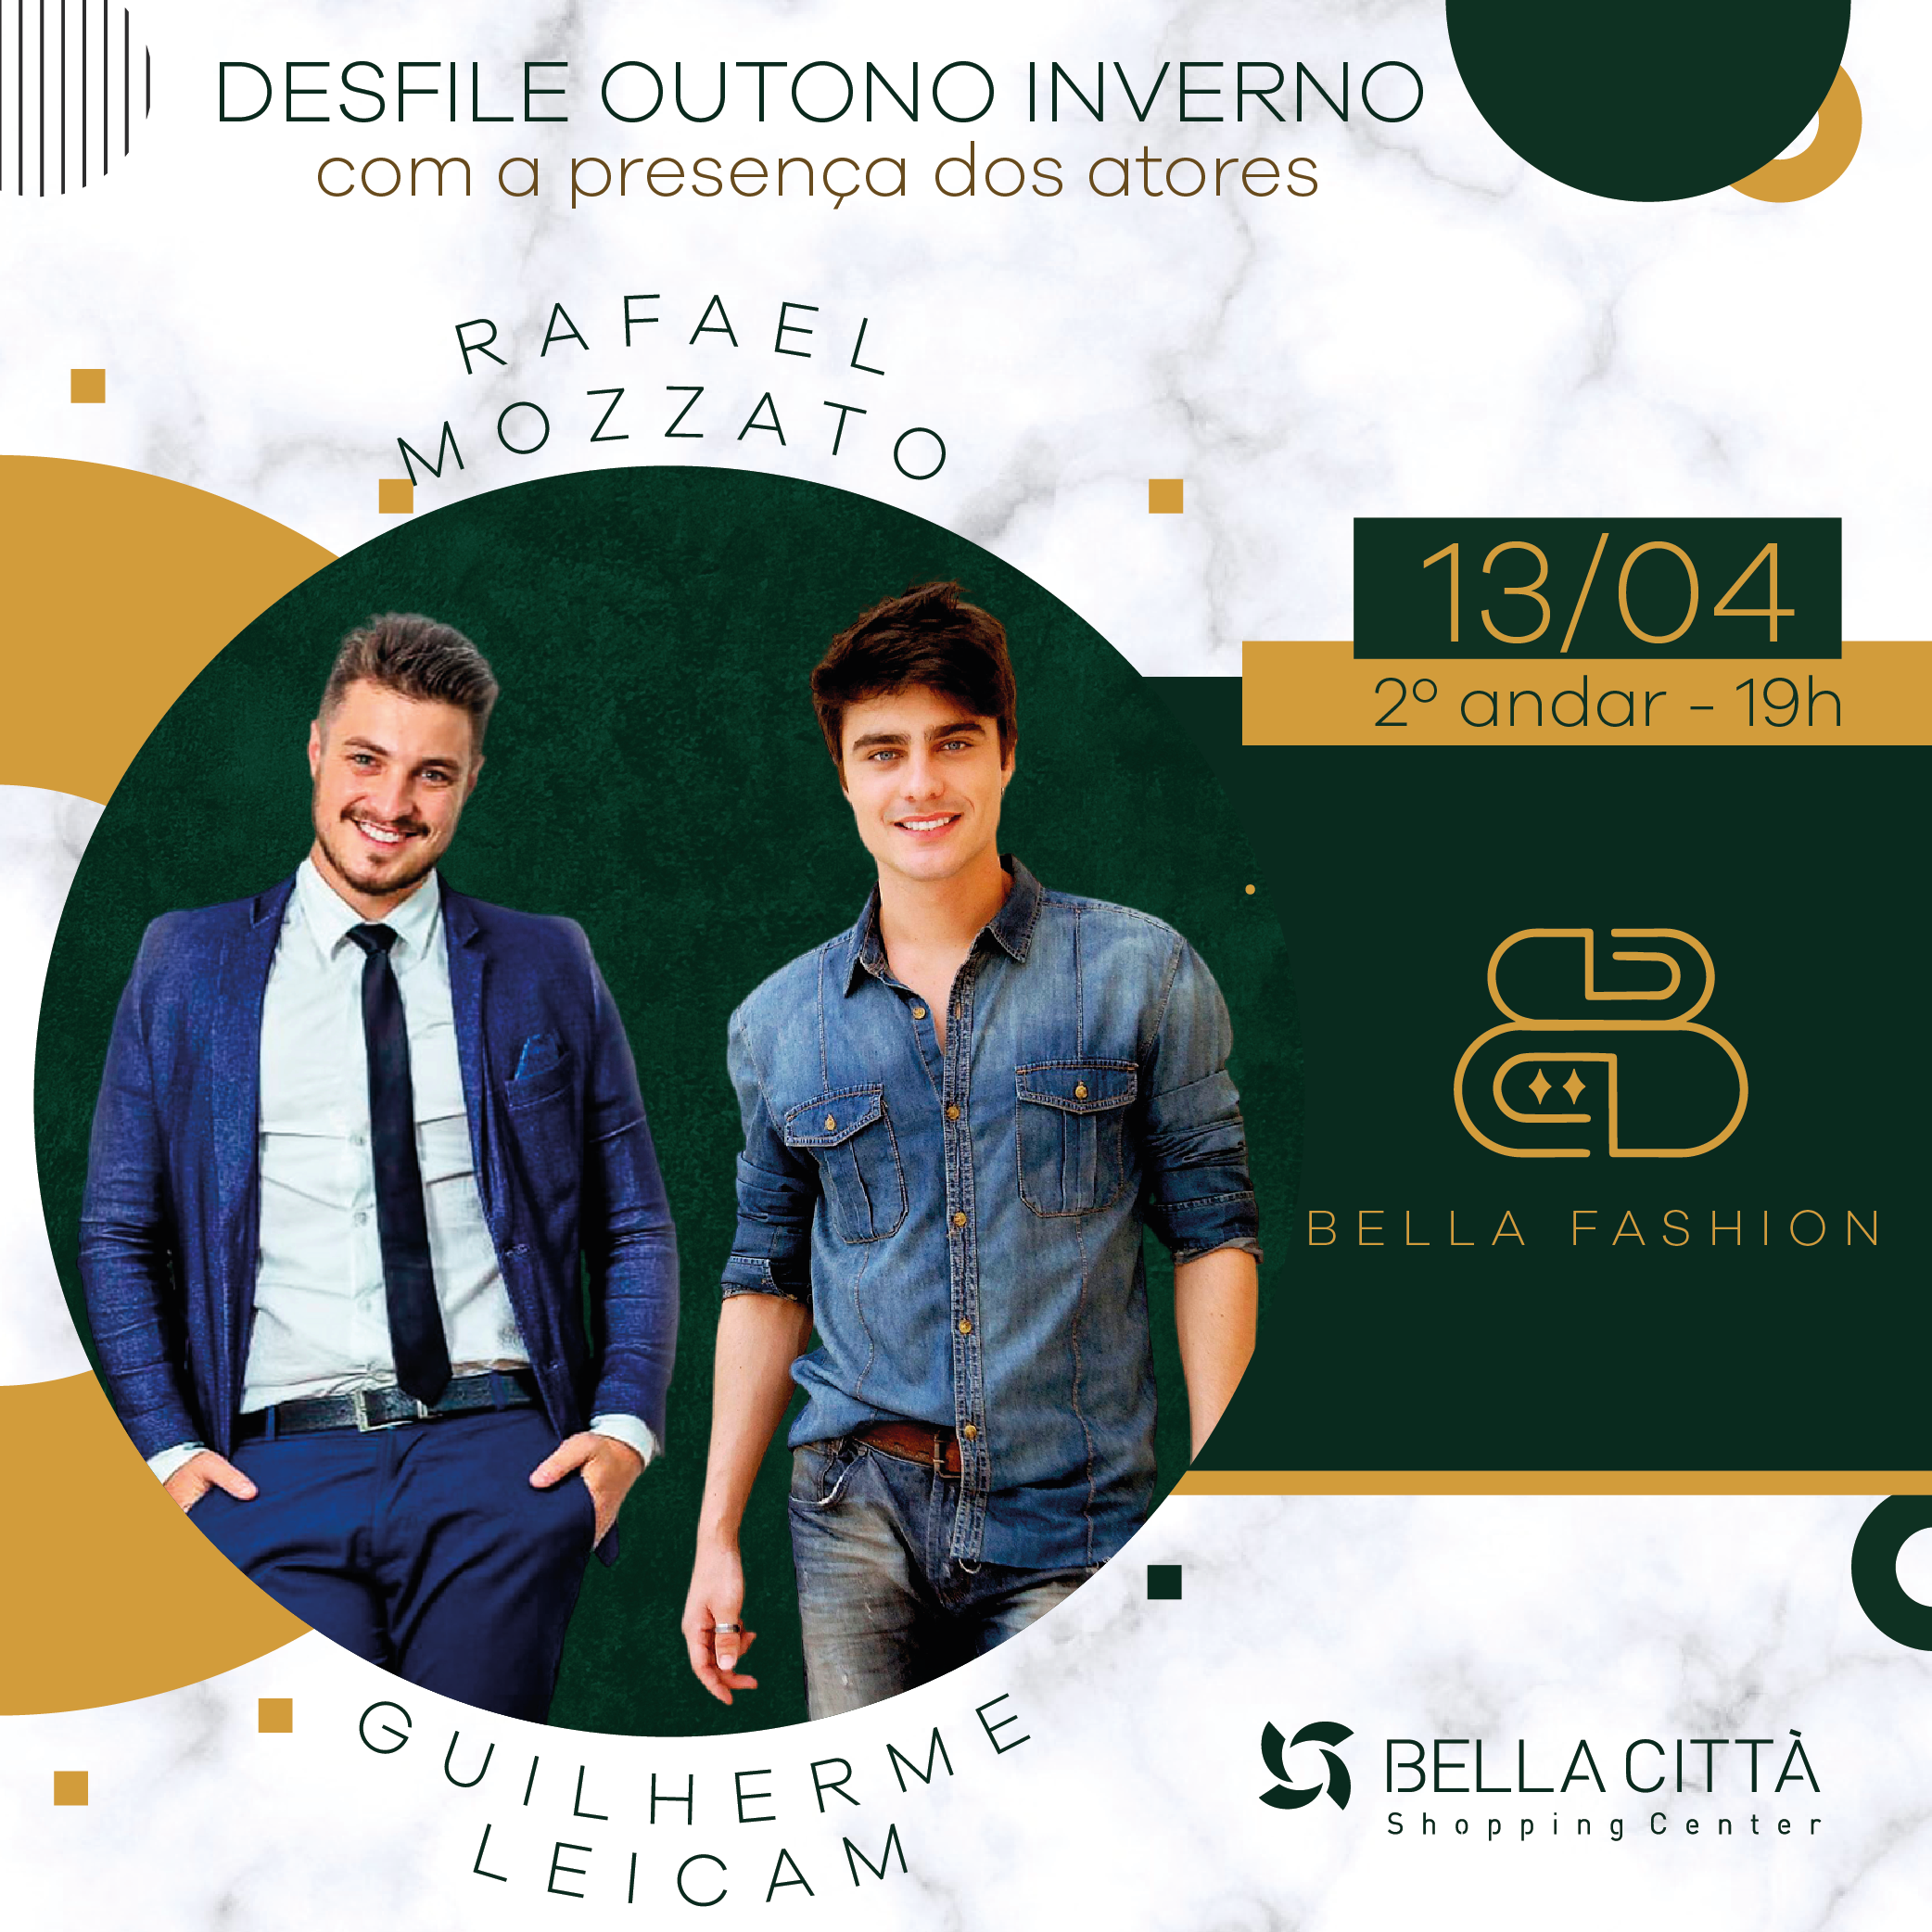 Bella Città Shopping promove desfile de moda, com dois grandes artistas